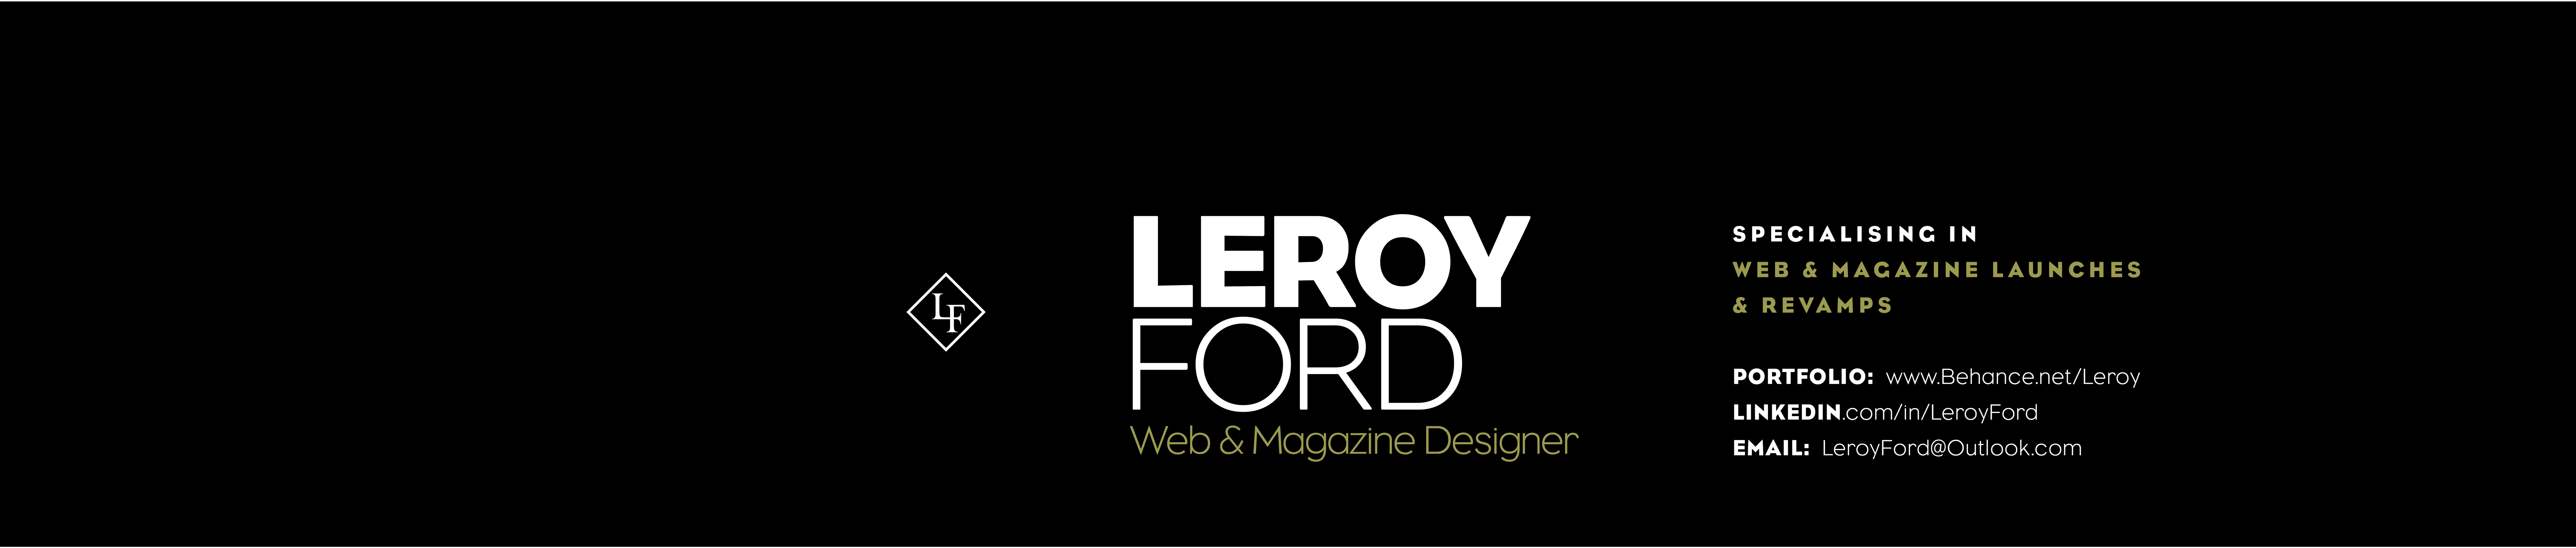 LEROY FORD profil başlığı